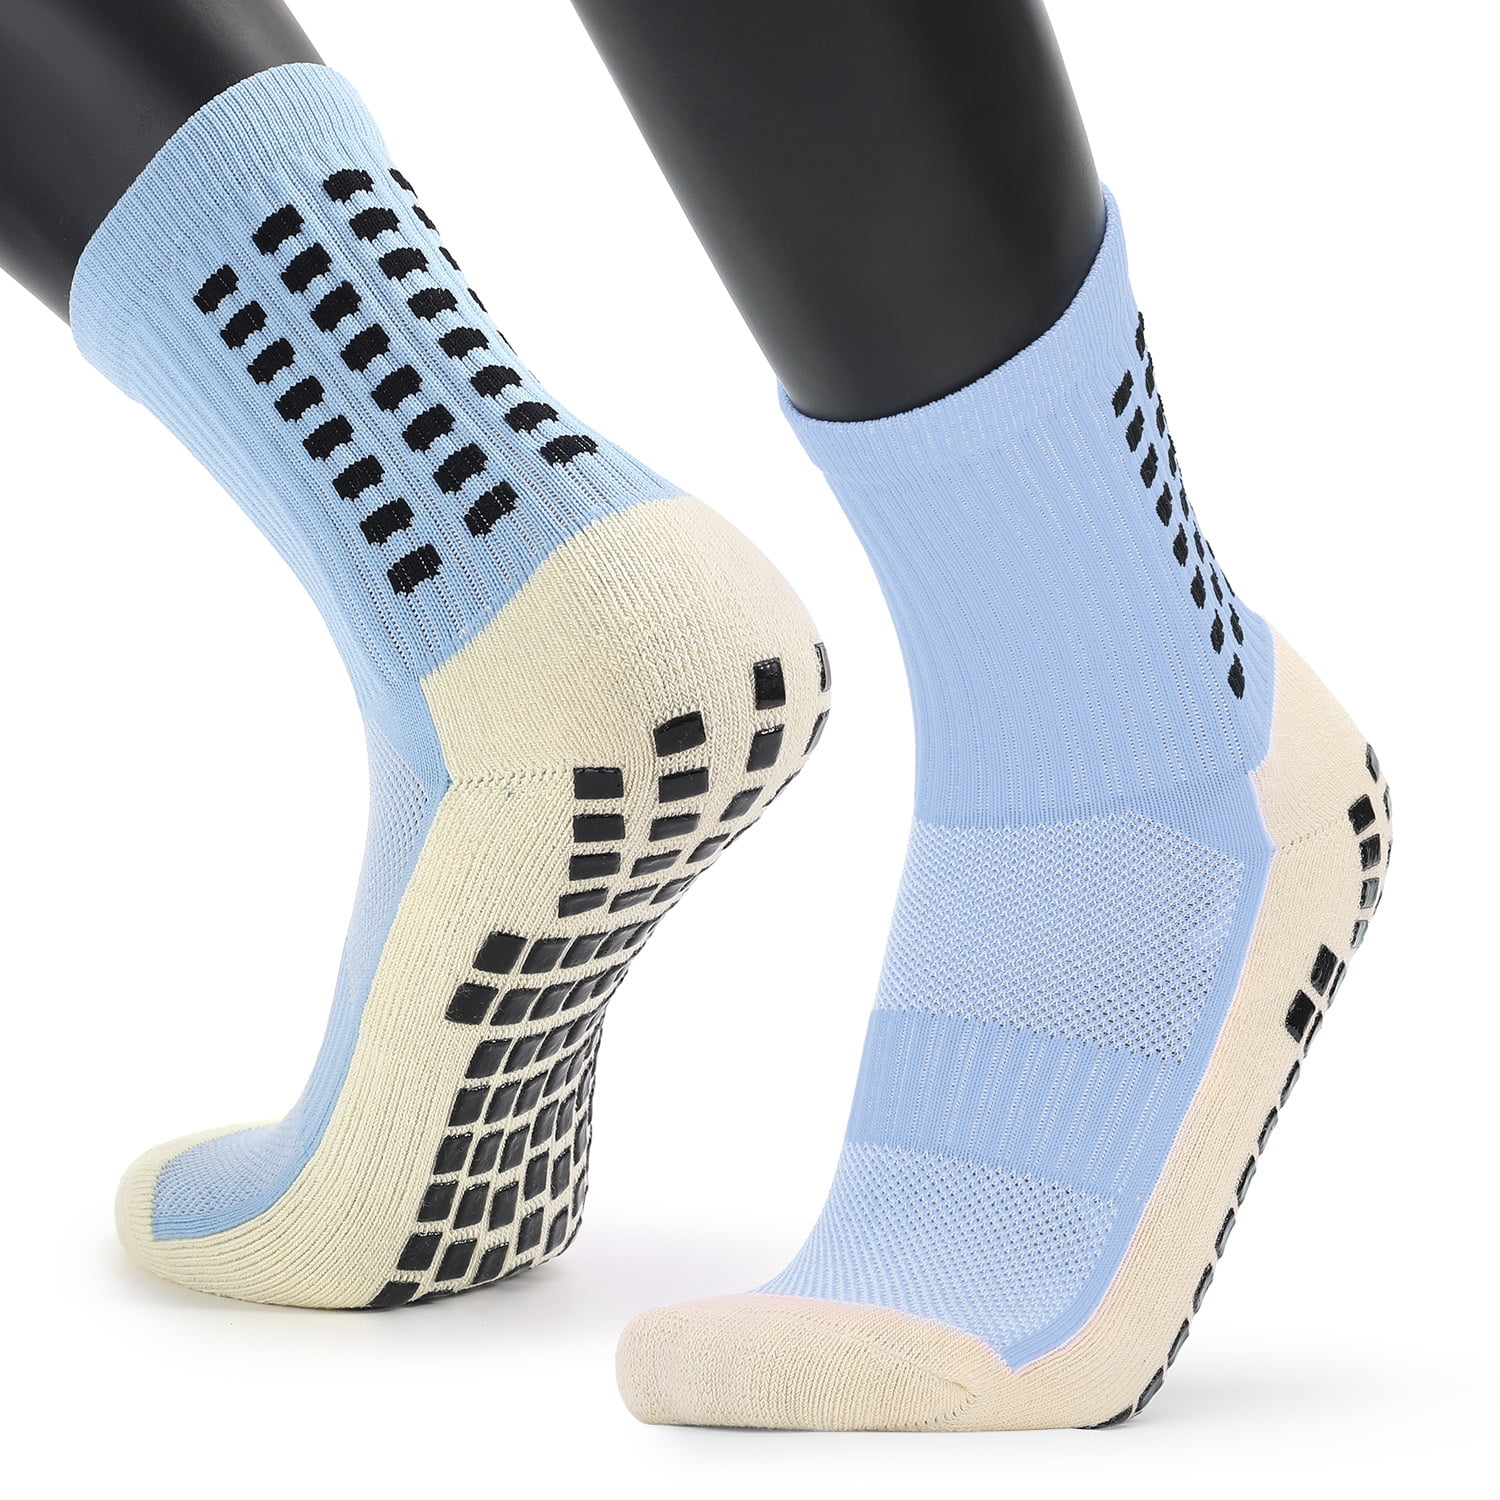 Mens Breathable Cotton Cushion Anti Slip Knee High Football Soccer Socks 2 Pairs/Pack 